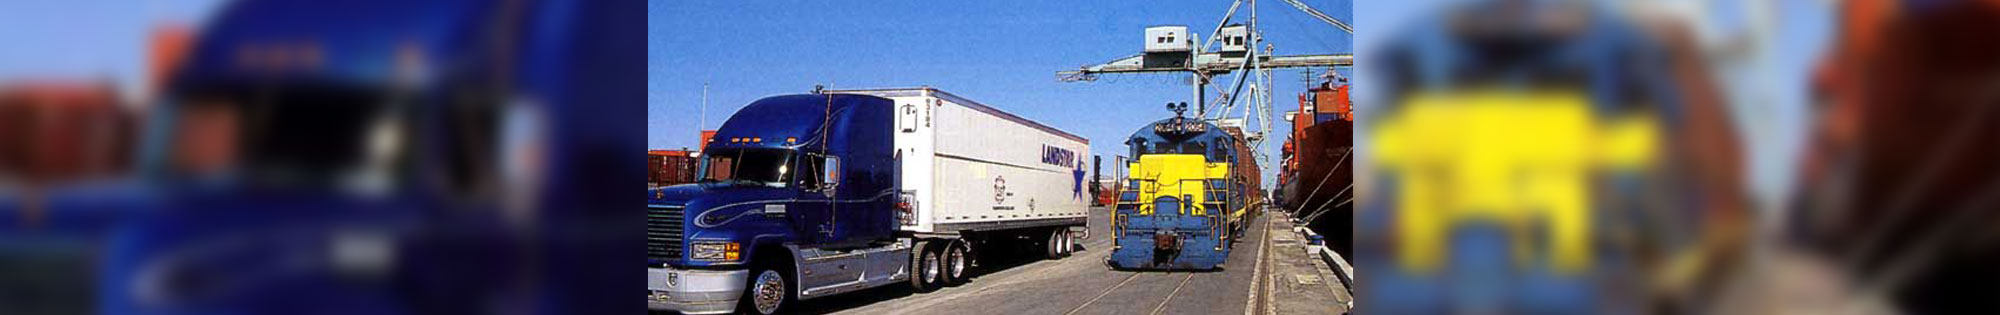 Transport Truck & Shipping Train